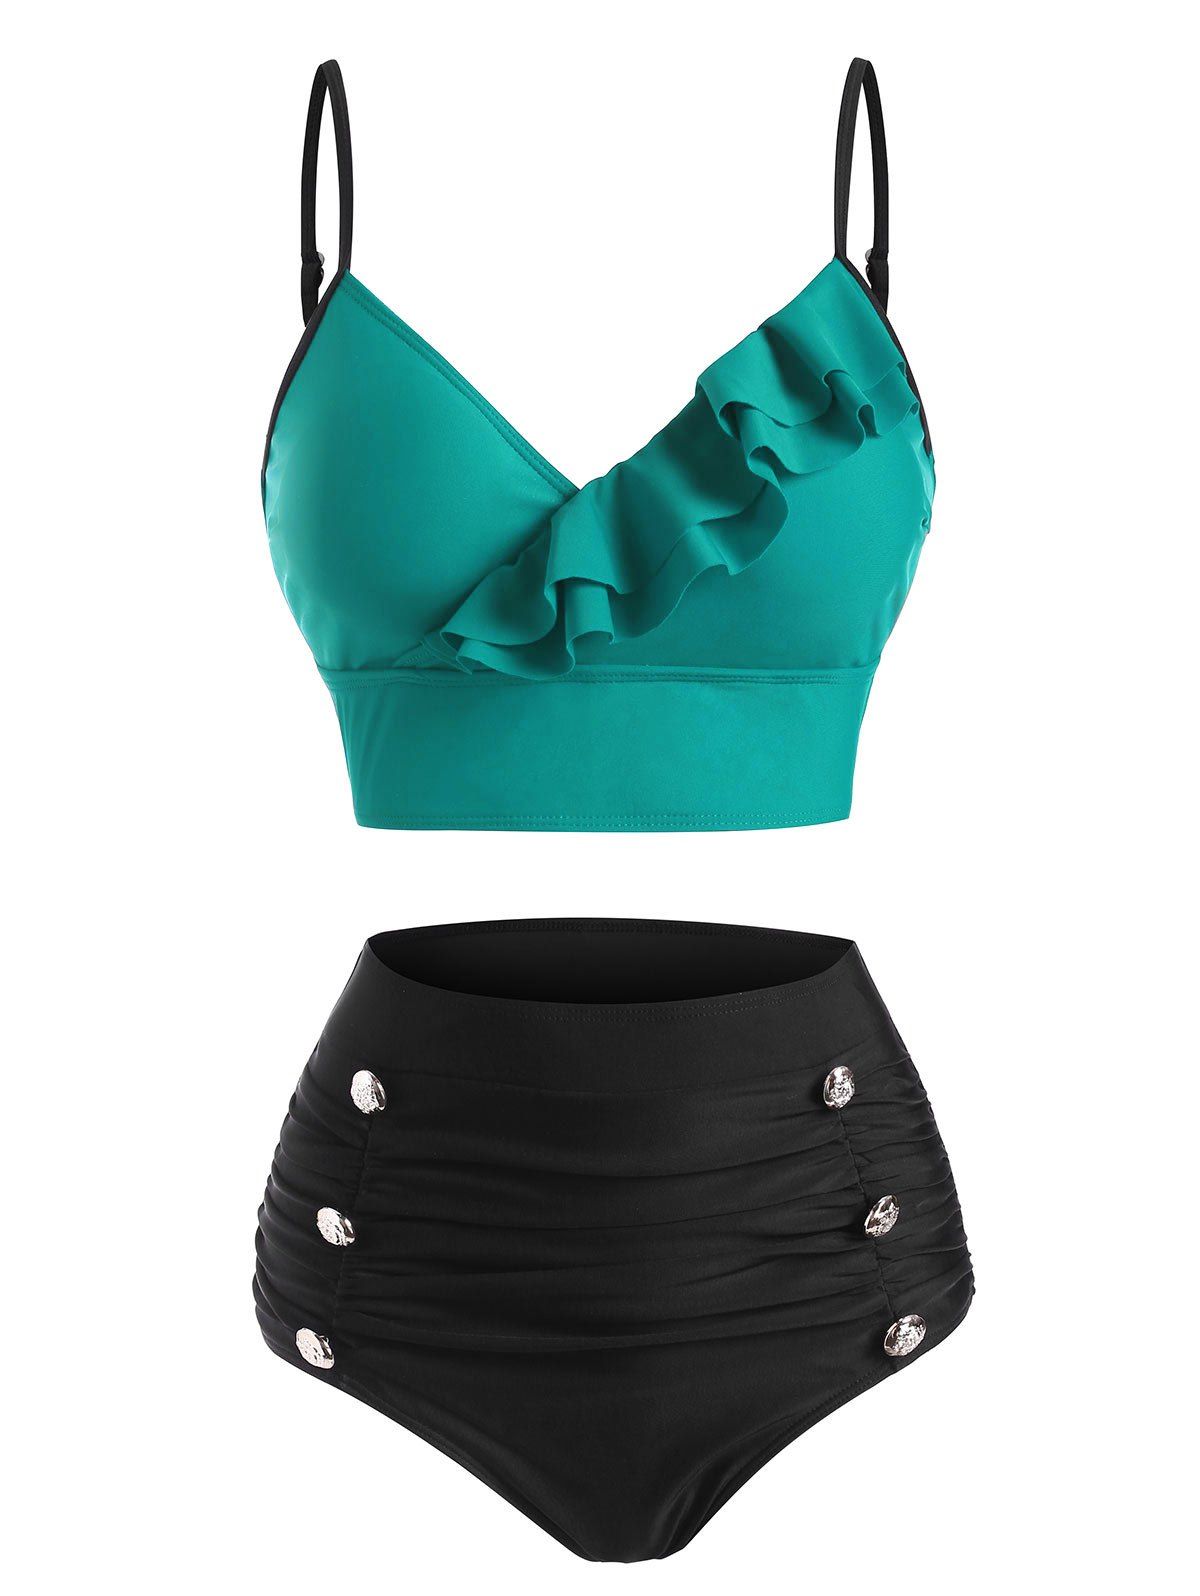 Tummy Control Bikini Swimwear Contrast Colorblock Swimsuit Mock Button Ruffle Sweet Summer Beach Bathing Suit - GREEN S